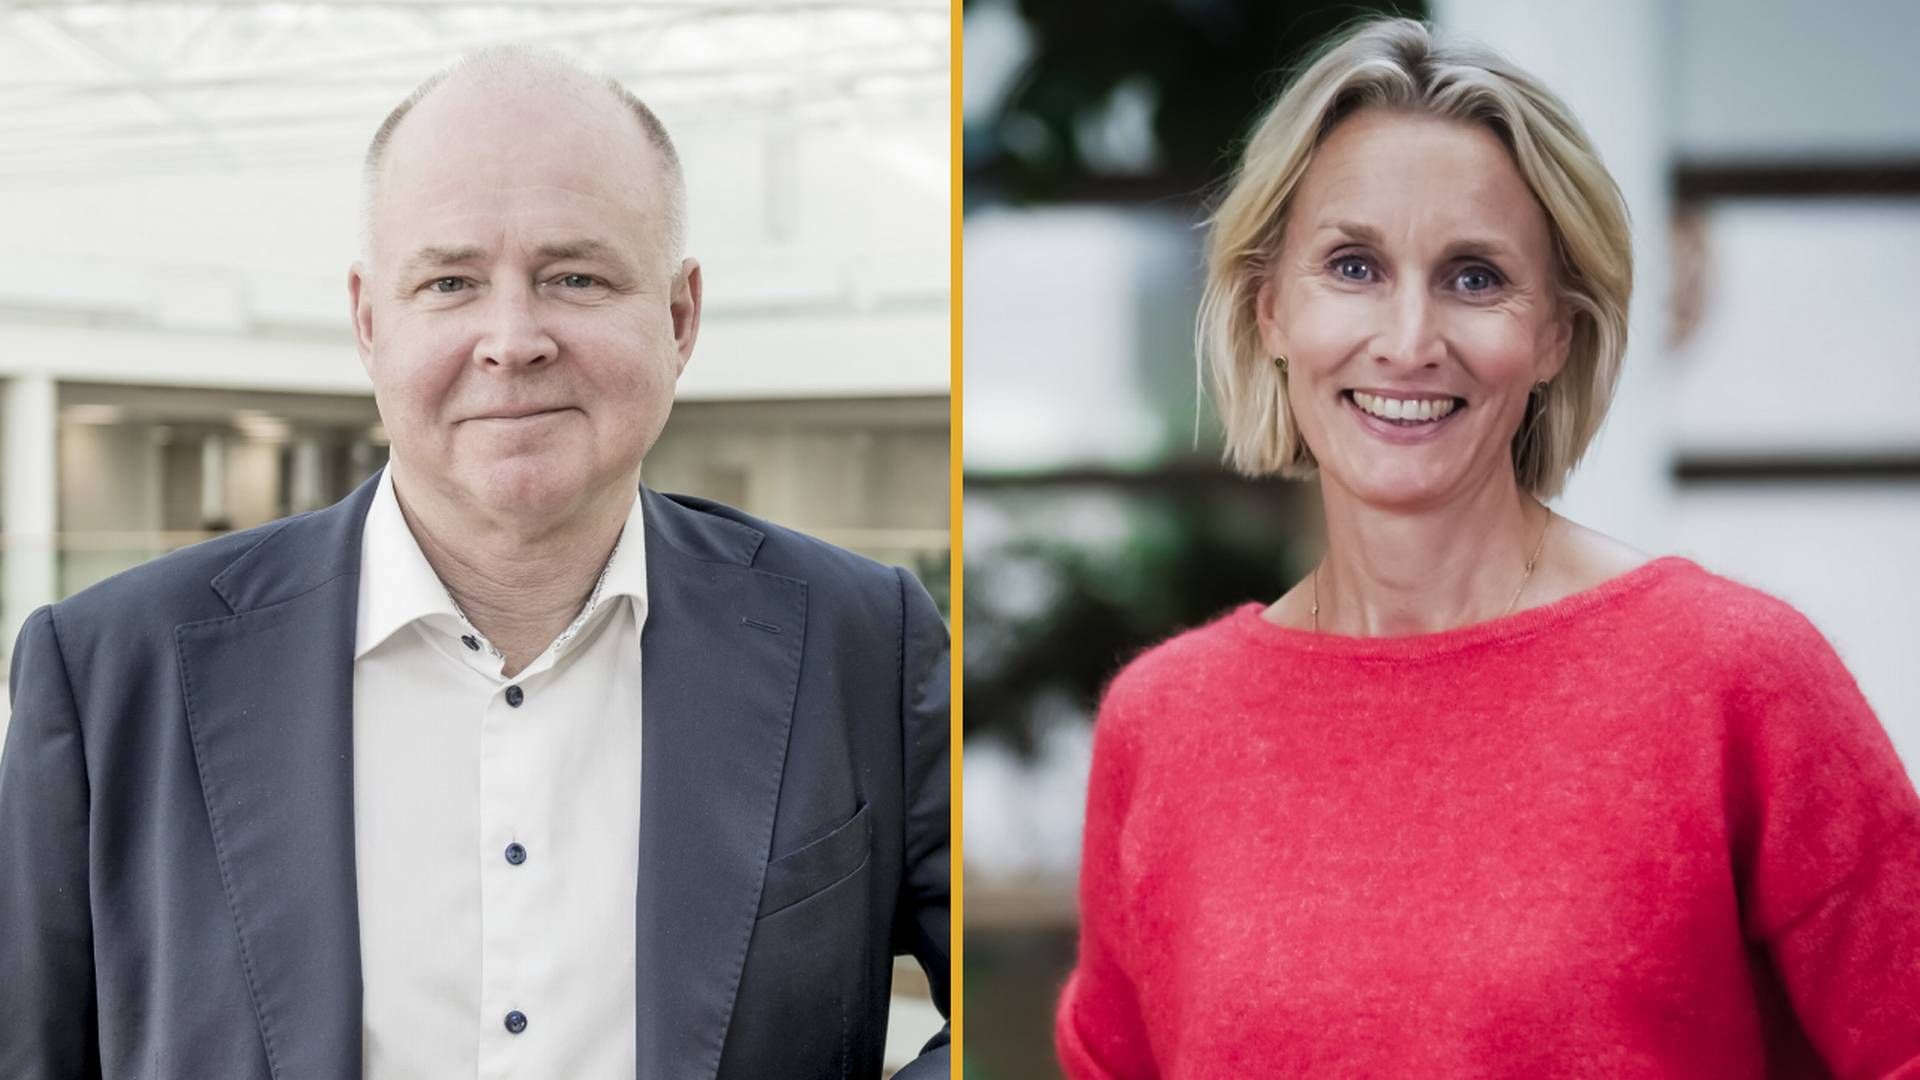 Leder for bedriftsmarked i Nordea Norge, Jon Brenden og landsjef for Nordea Norge og leder for privatmarkedet i banken, Randi Marjamaa. | Foto: Nordea / PR